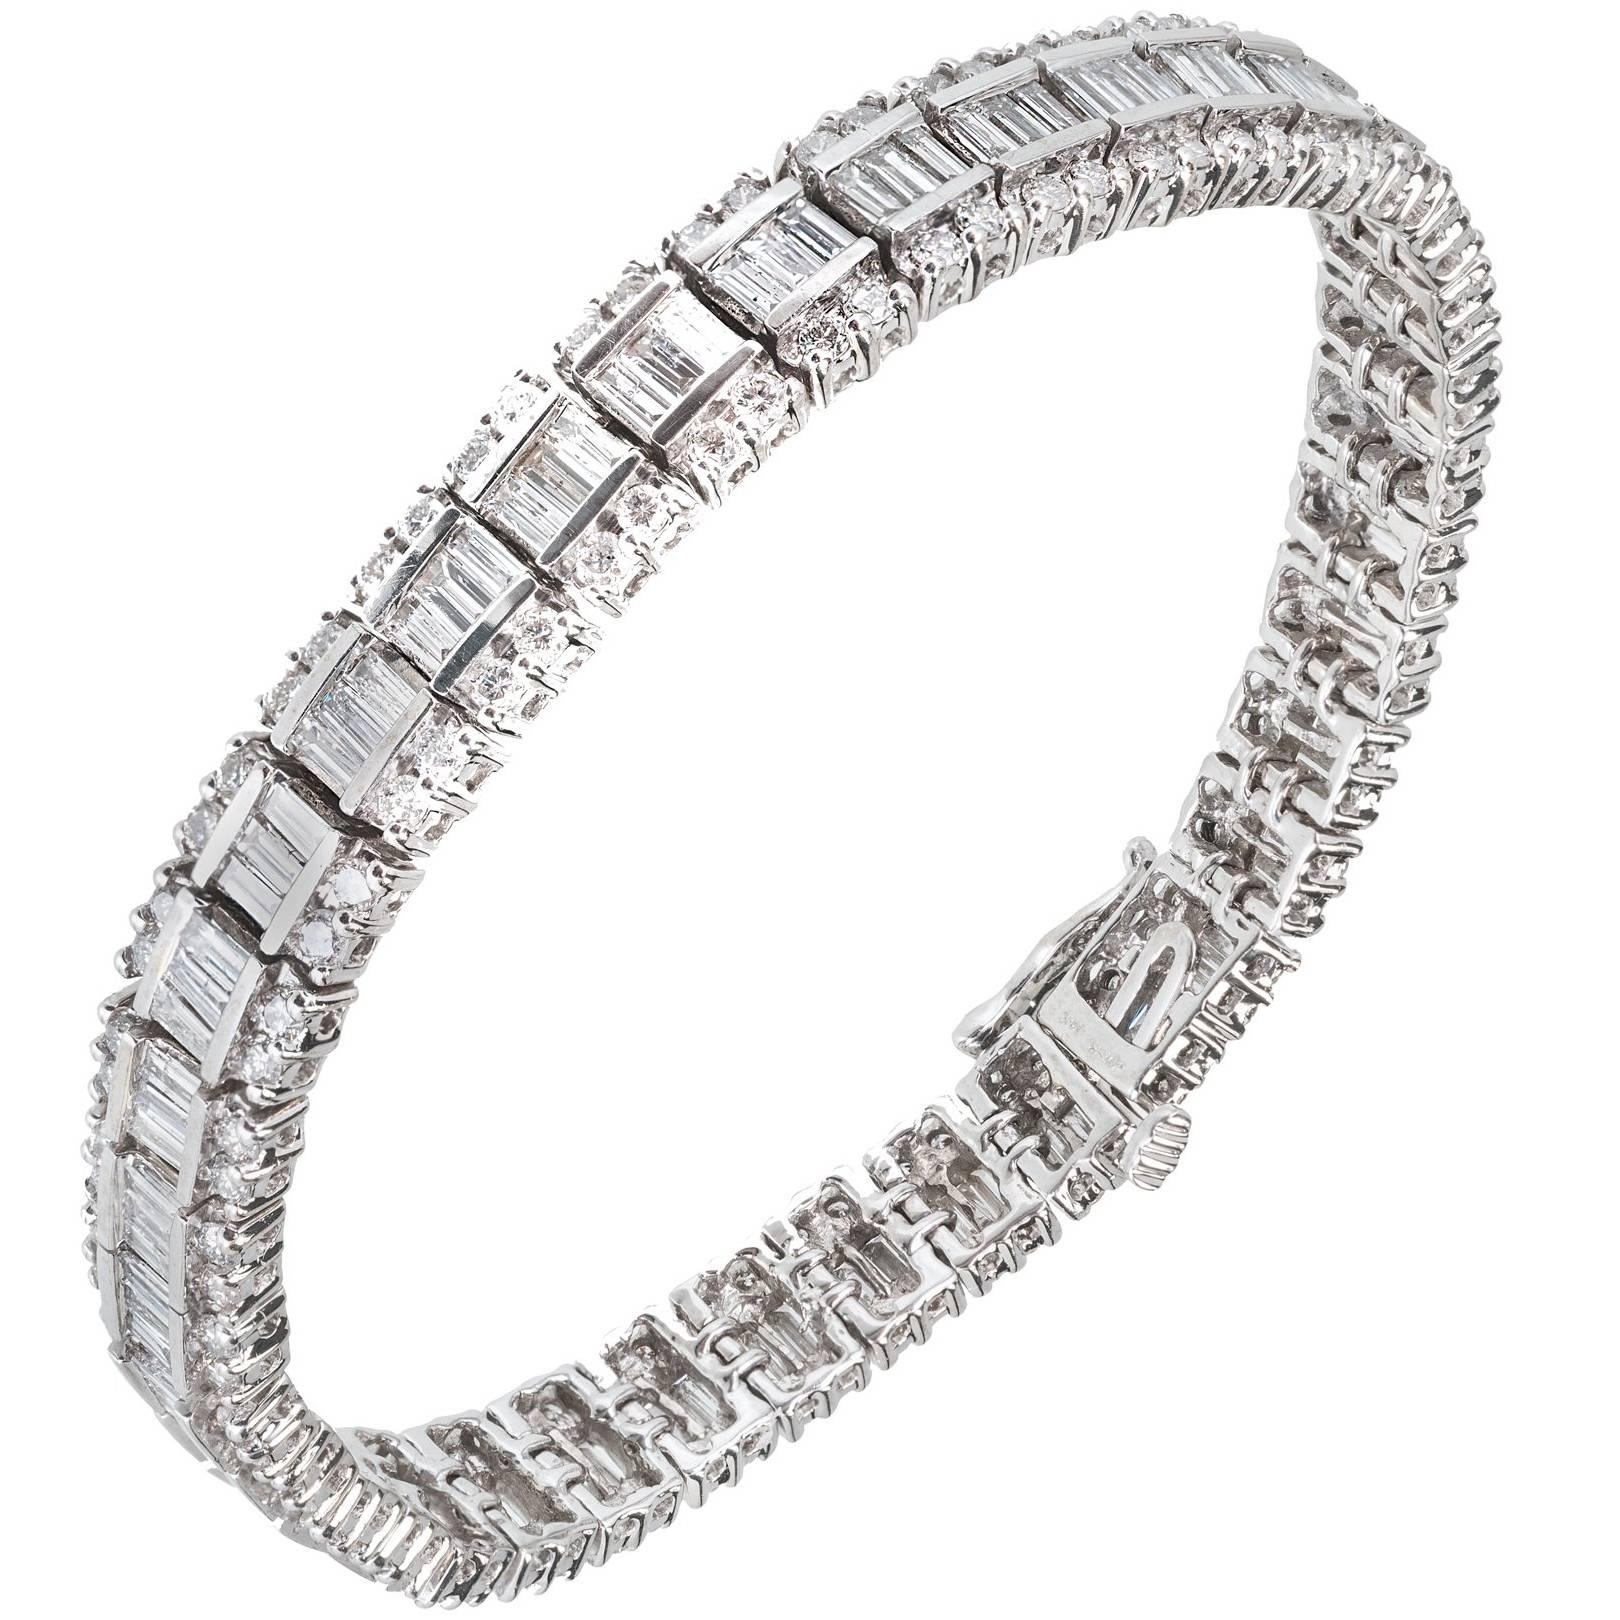 Goldarmband mit 5,17 Karat rundem Baguette-Diamant